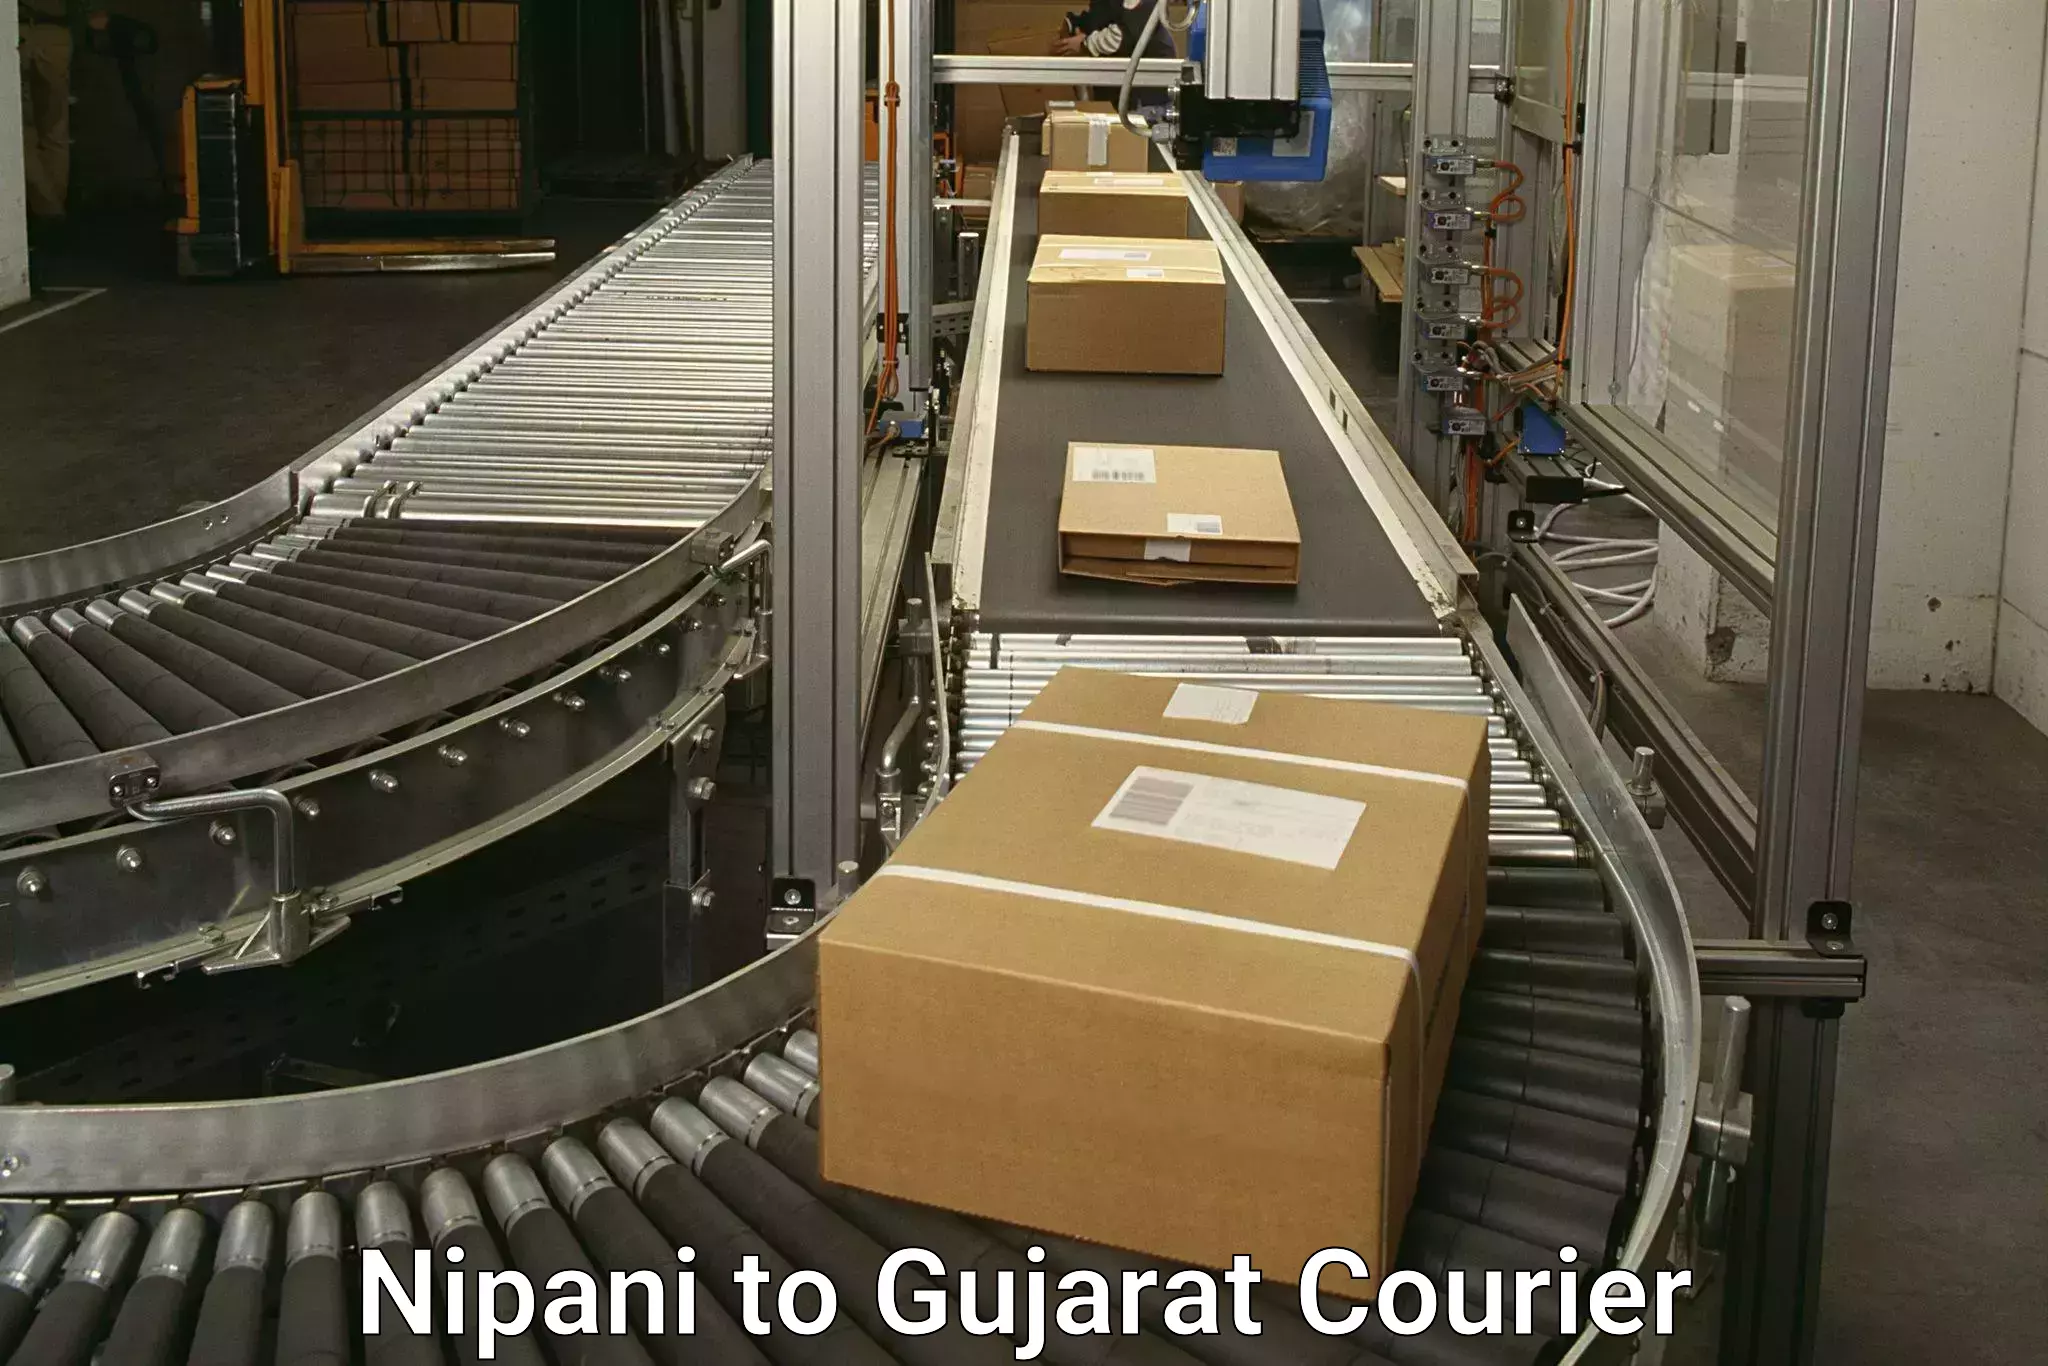 Express delivery network Nipani to Vadodara